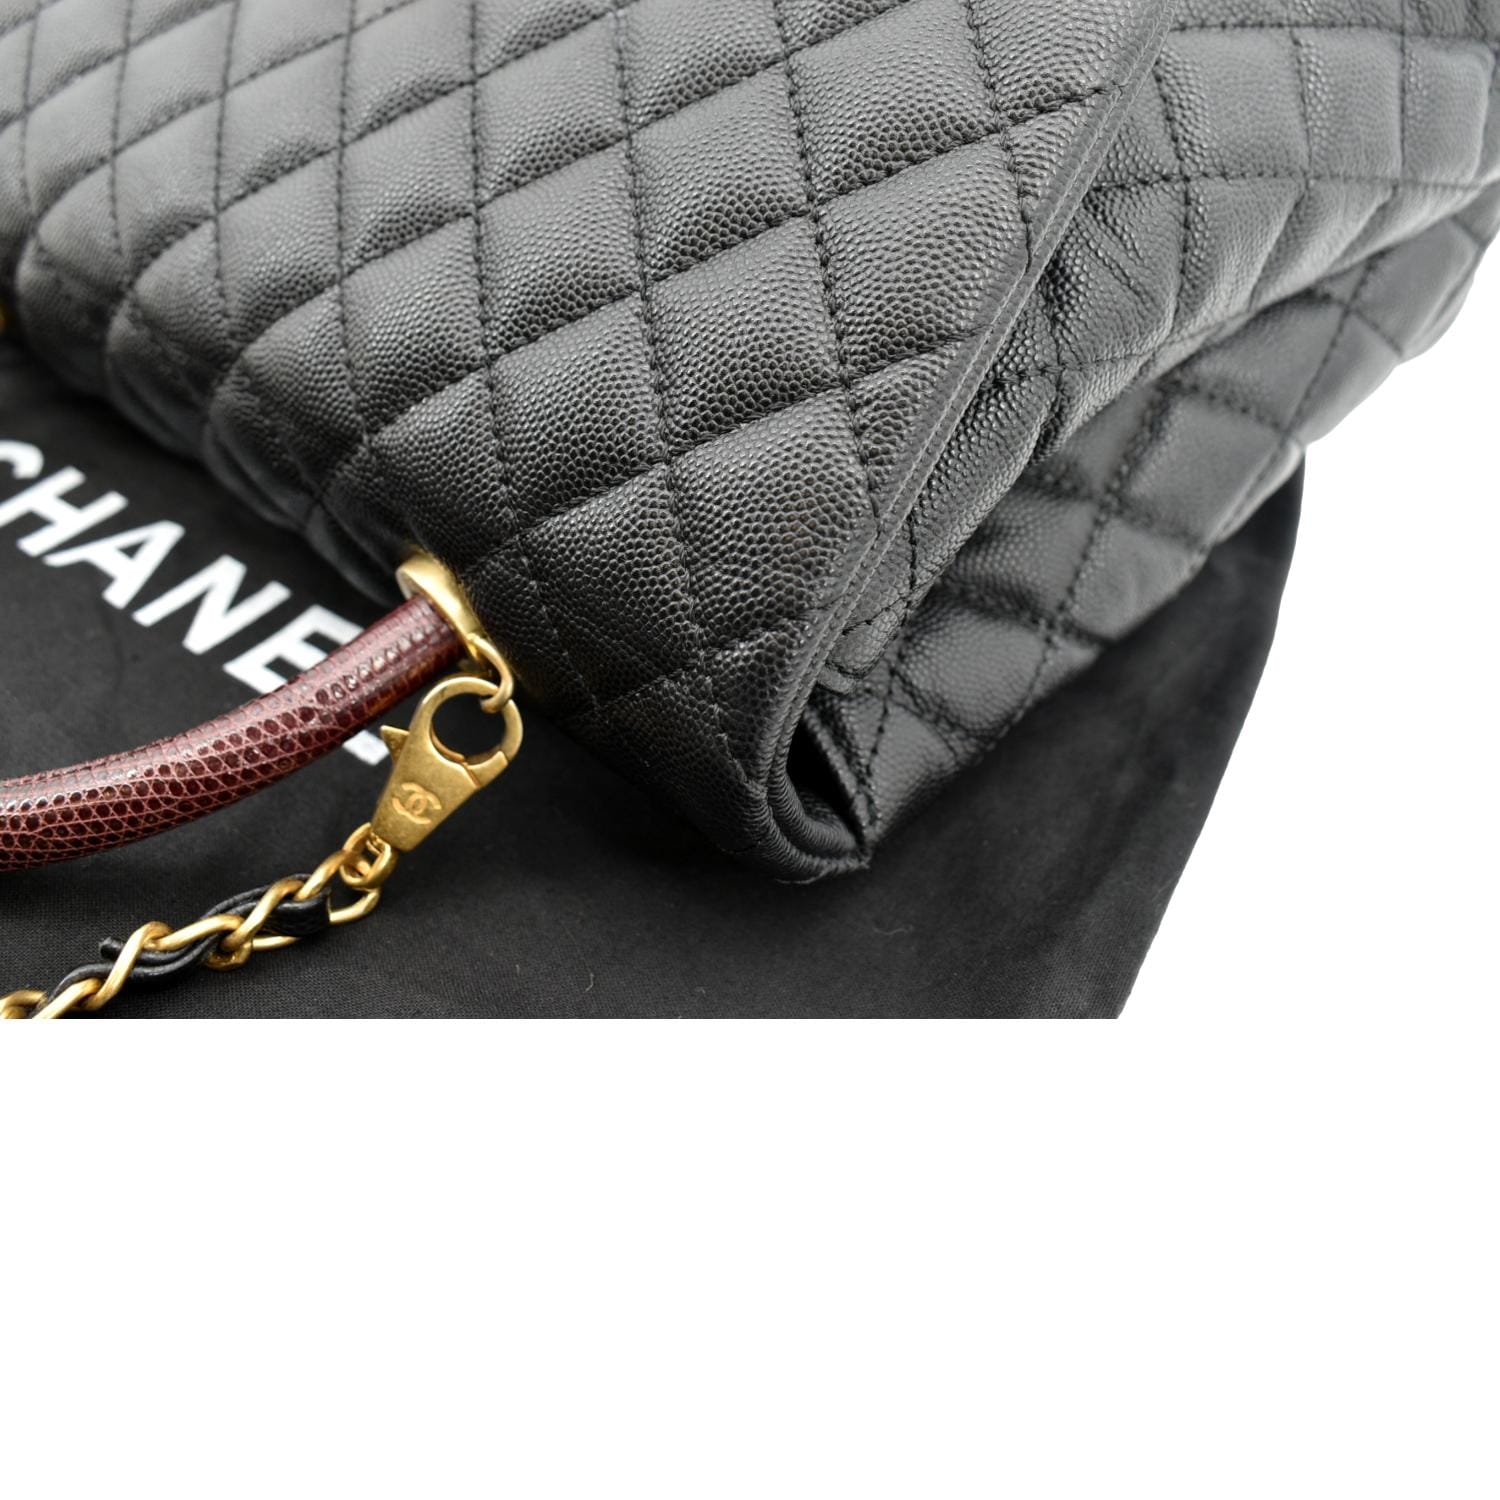 CHANEL Coco Mini Top Lizard Handle Caviar Leather Shoulder Bag Black